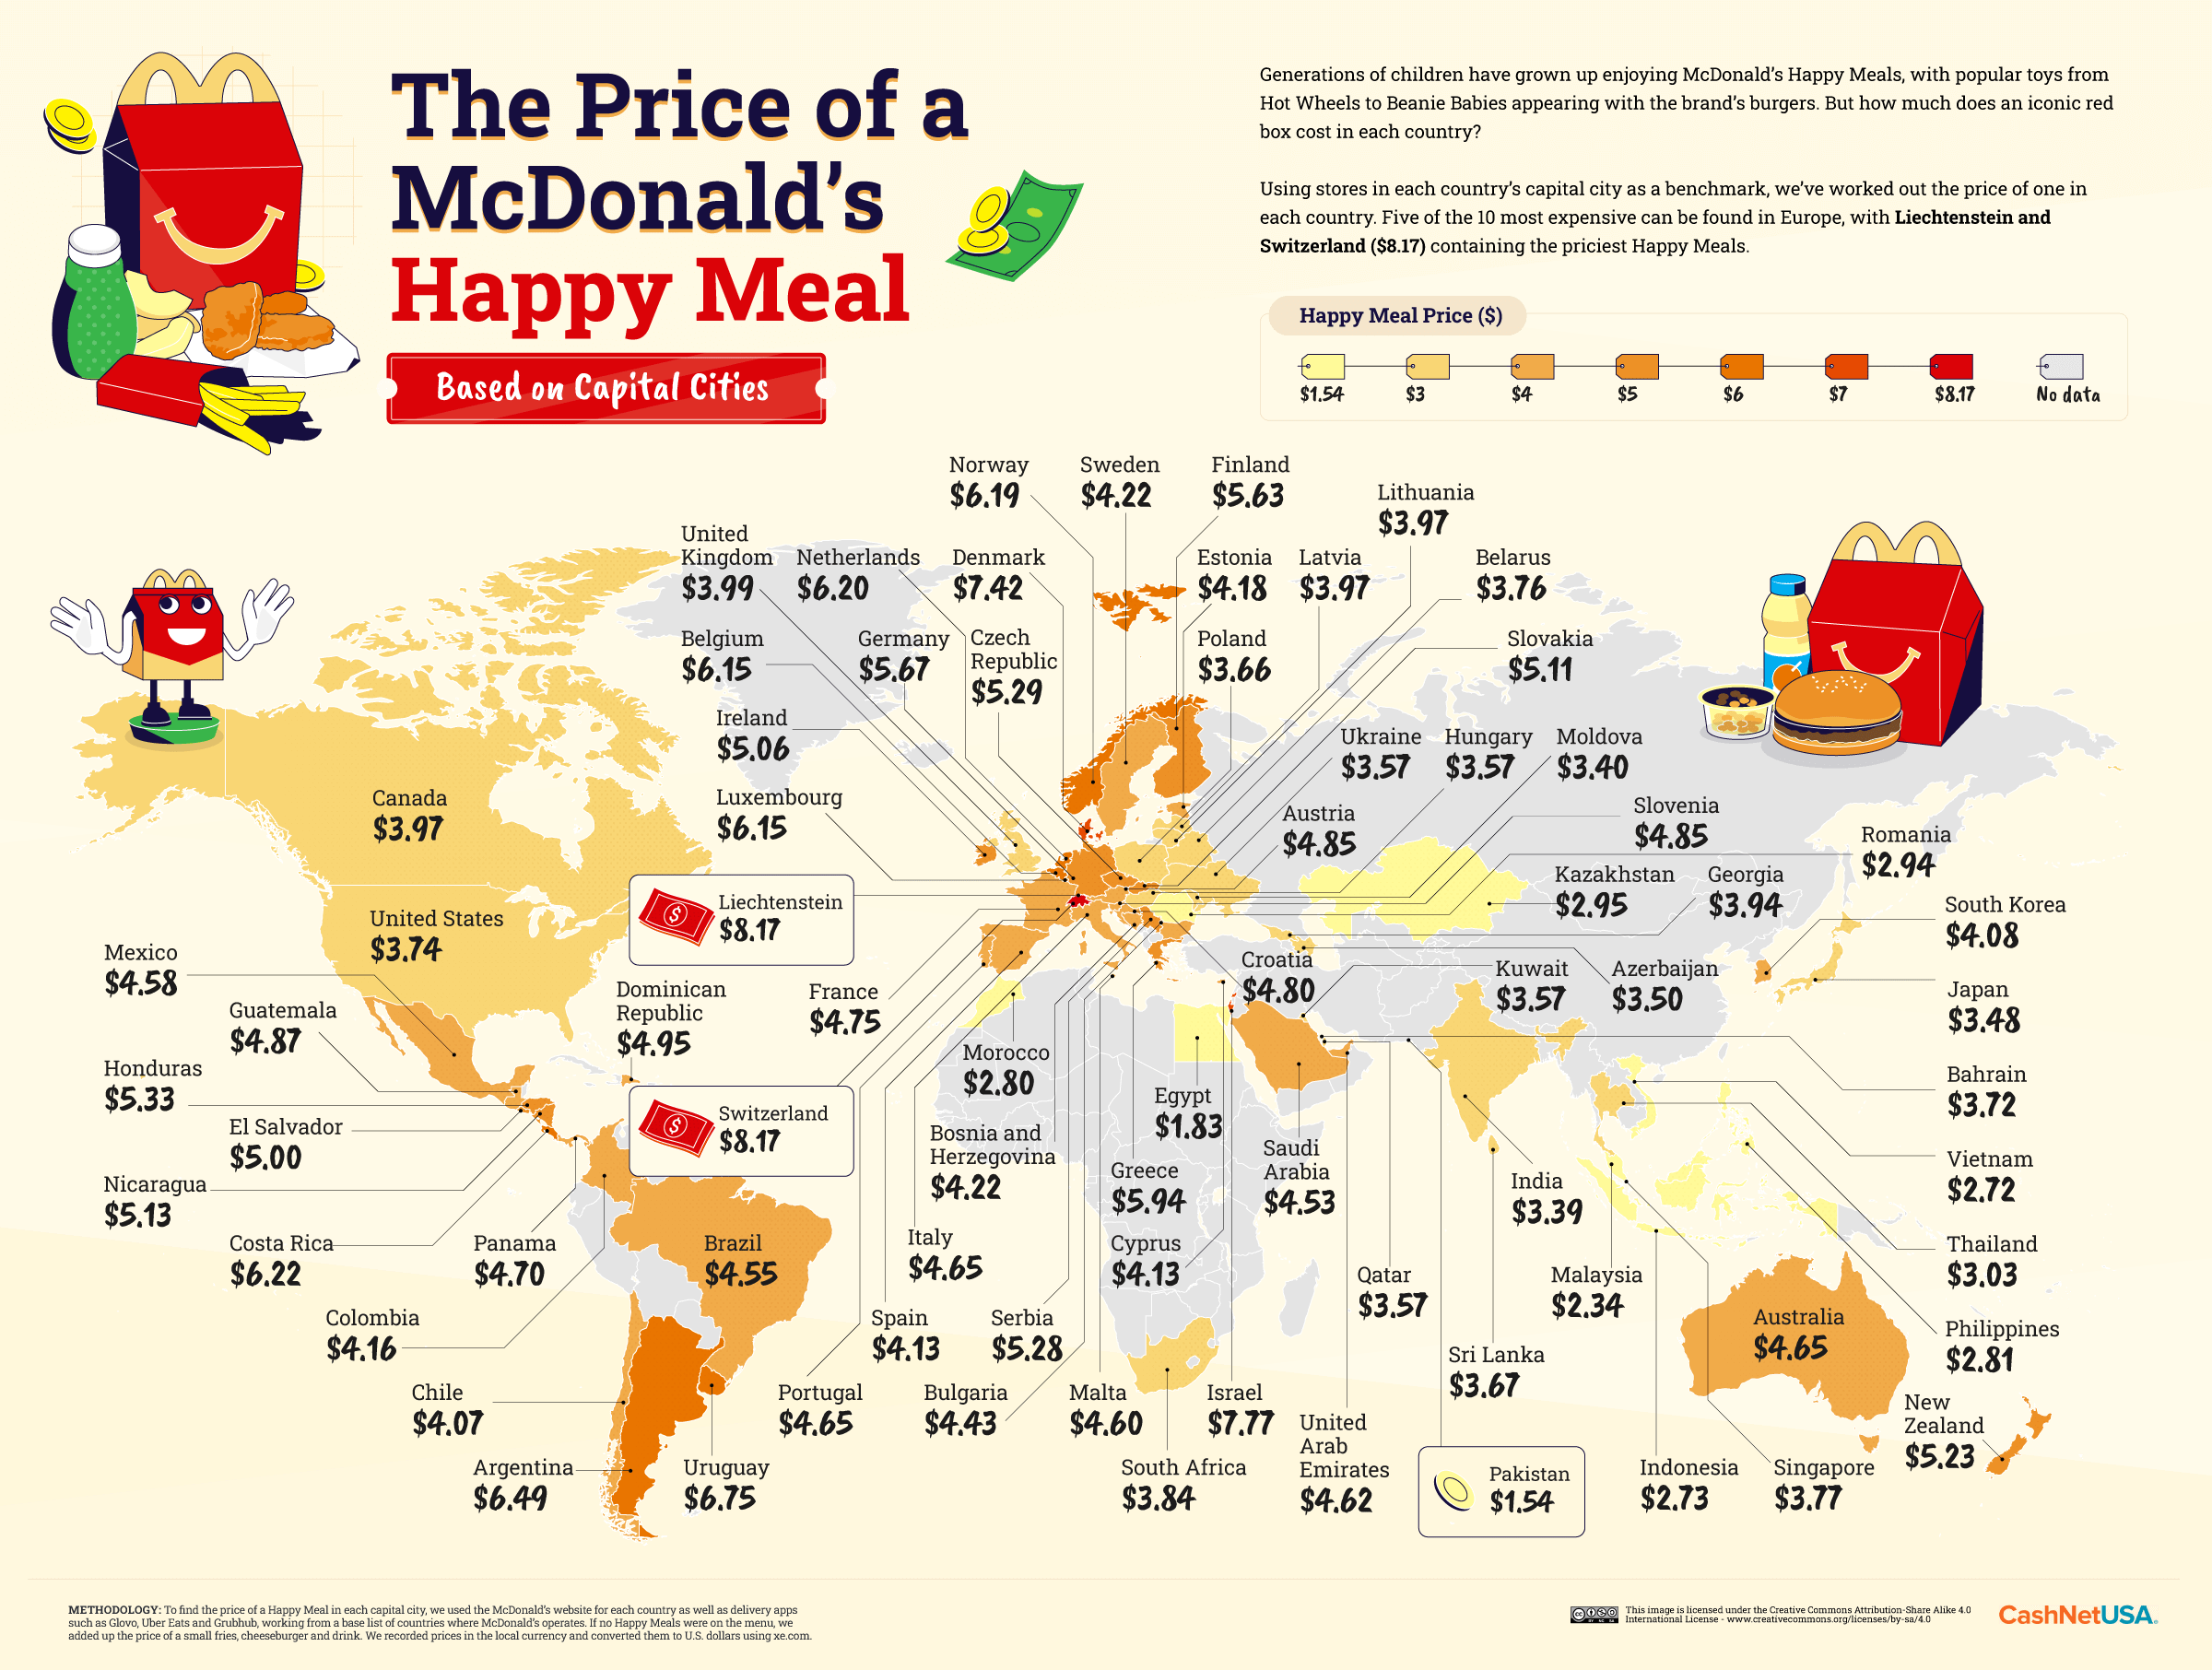 The Price of McDonald's Around the World and America - CashNetUSA Blog